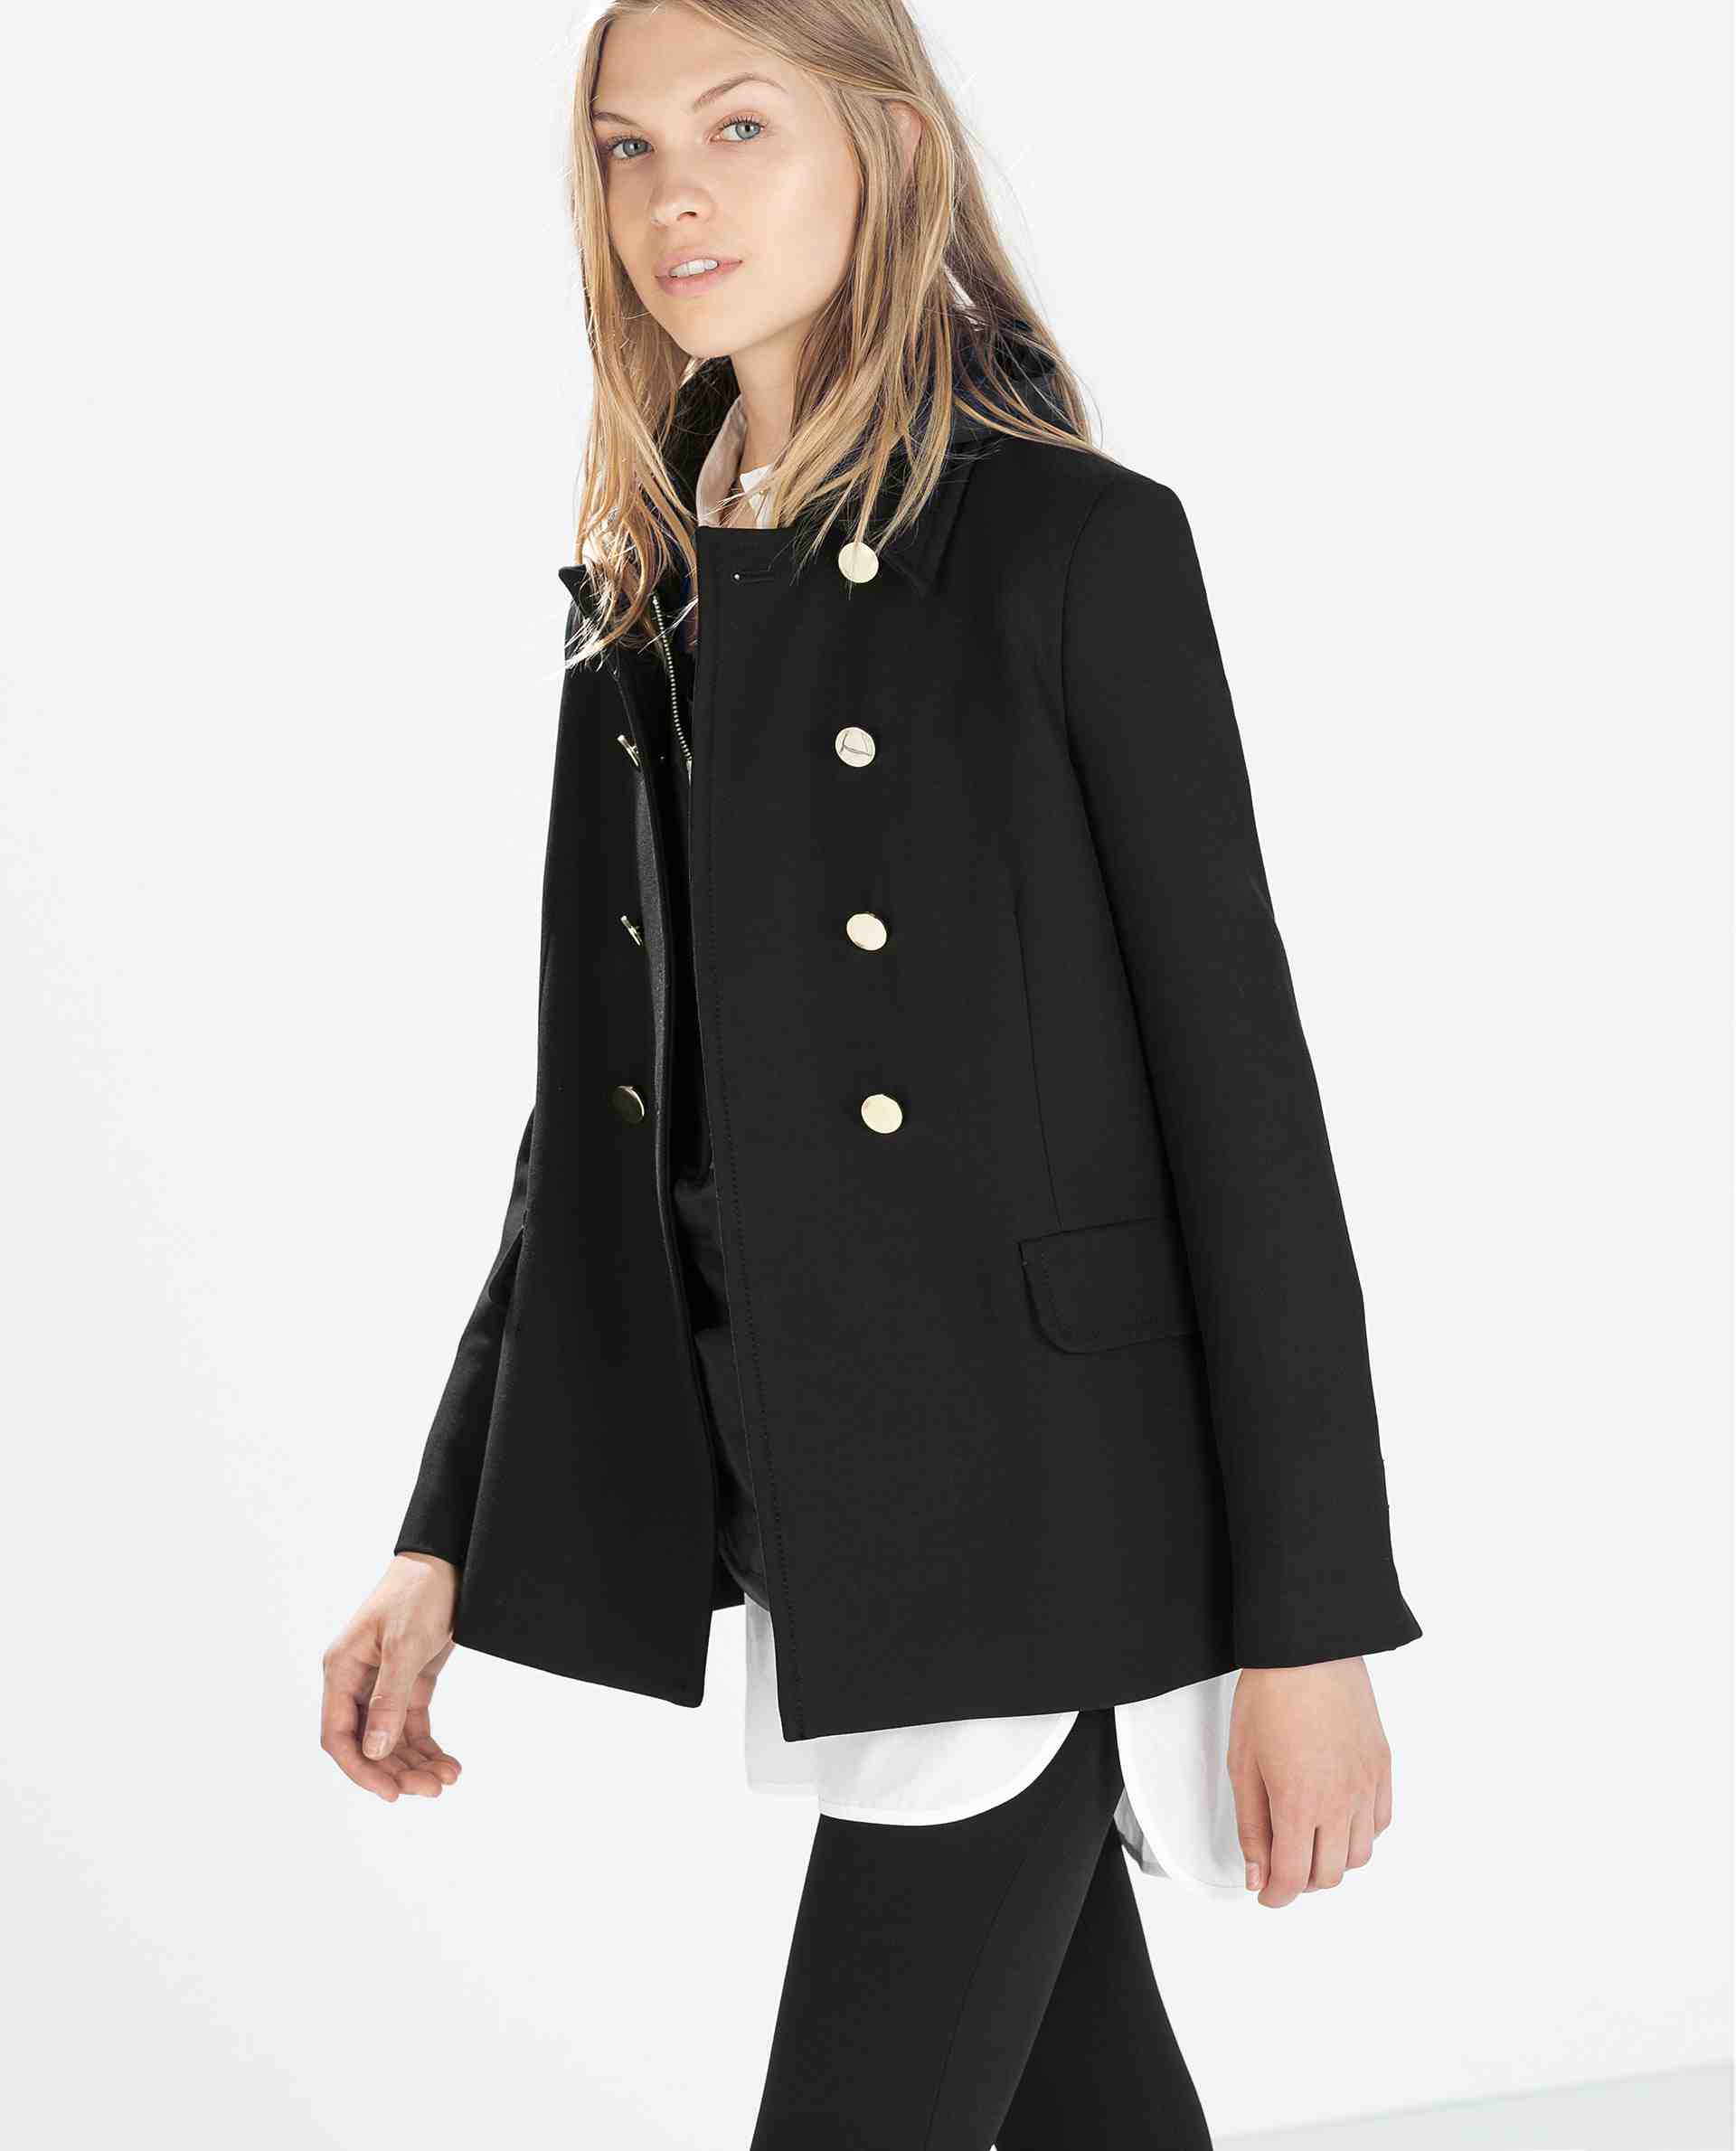 Zara - Manteau (90 €)